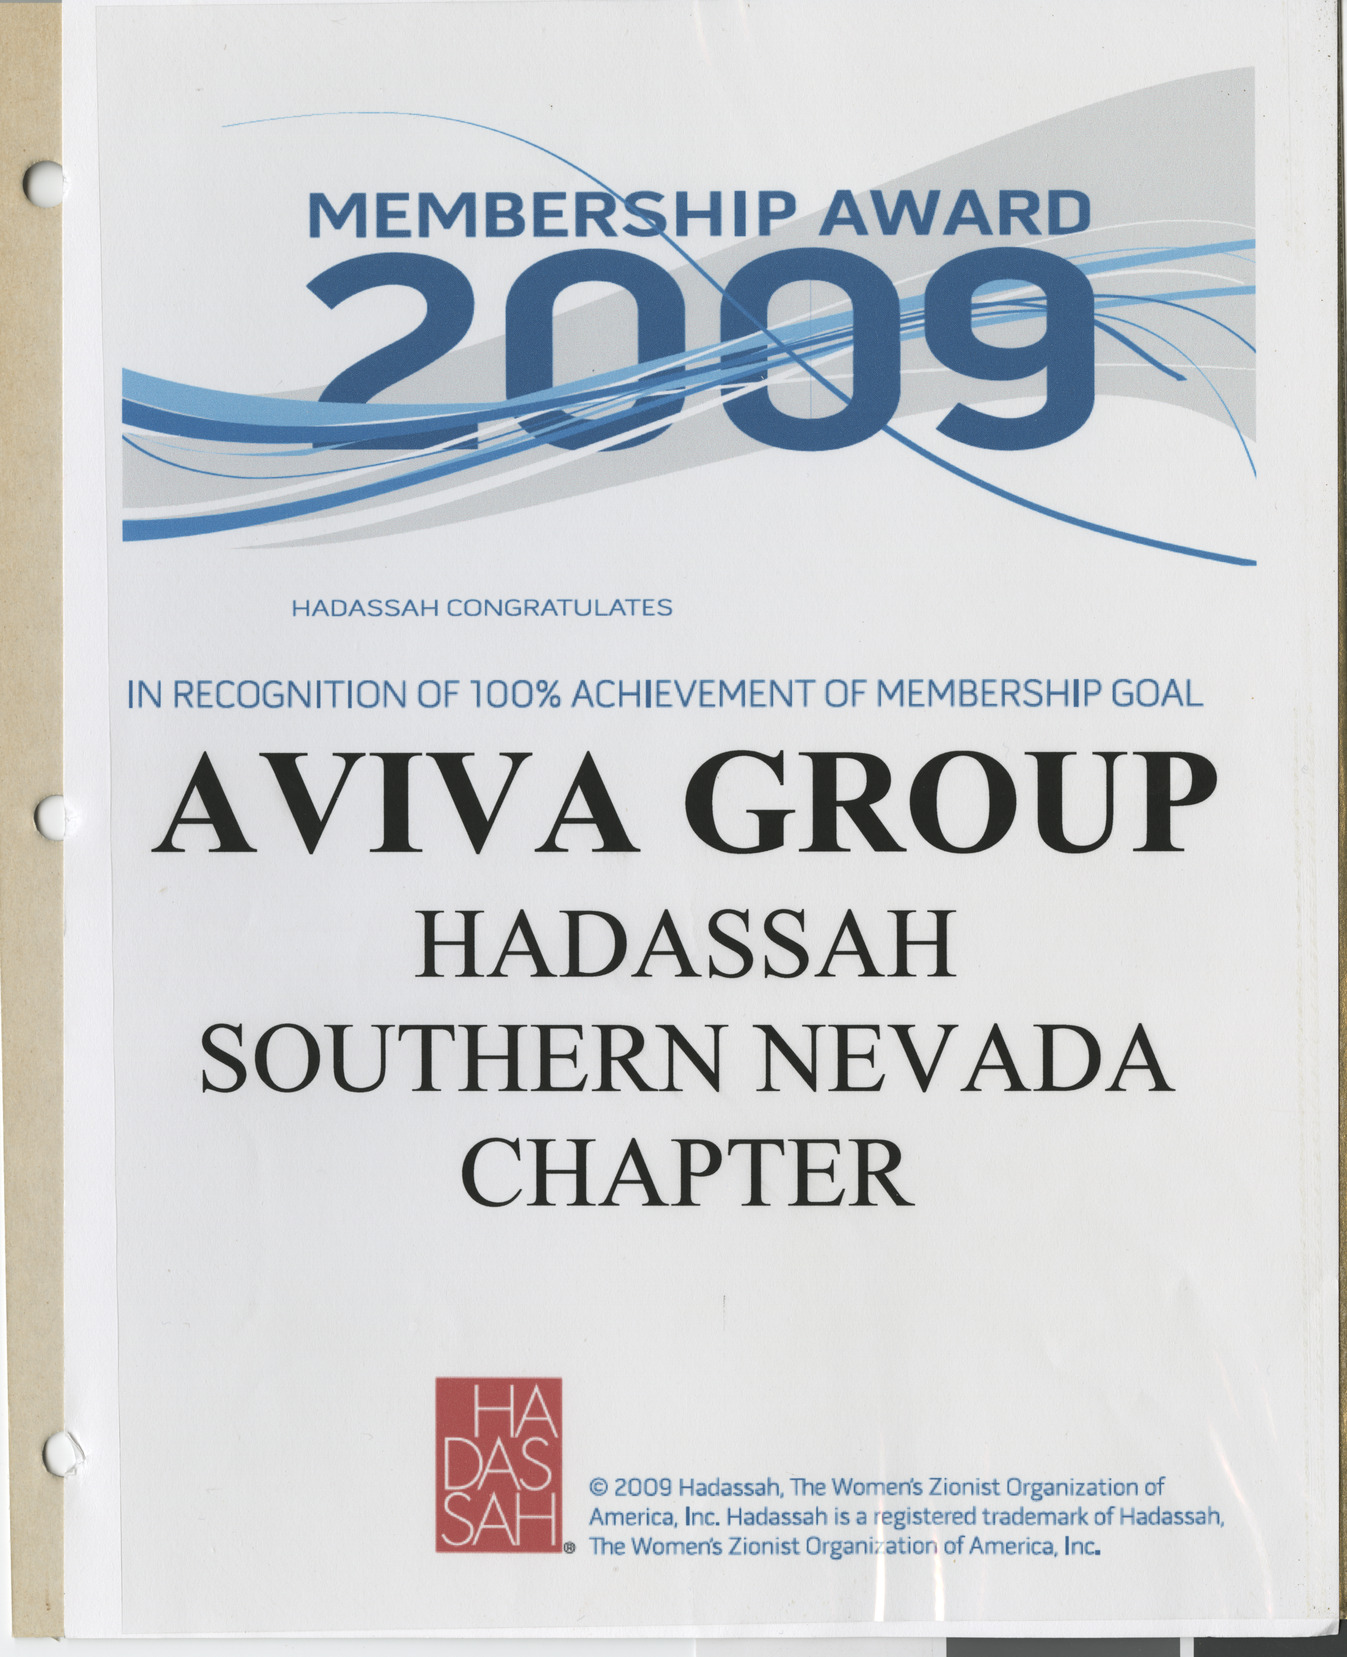 Membership award for Aviva Group Hadassah Southern Nevada Chapter, 2009